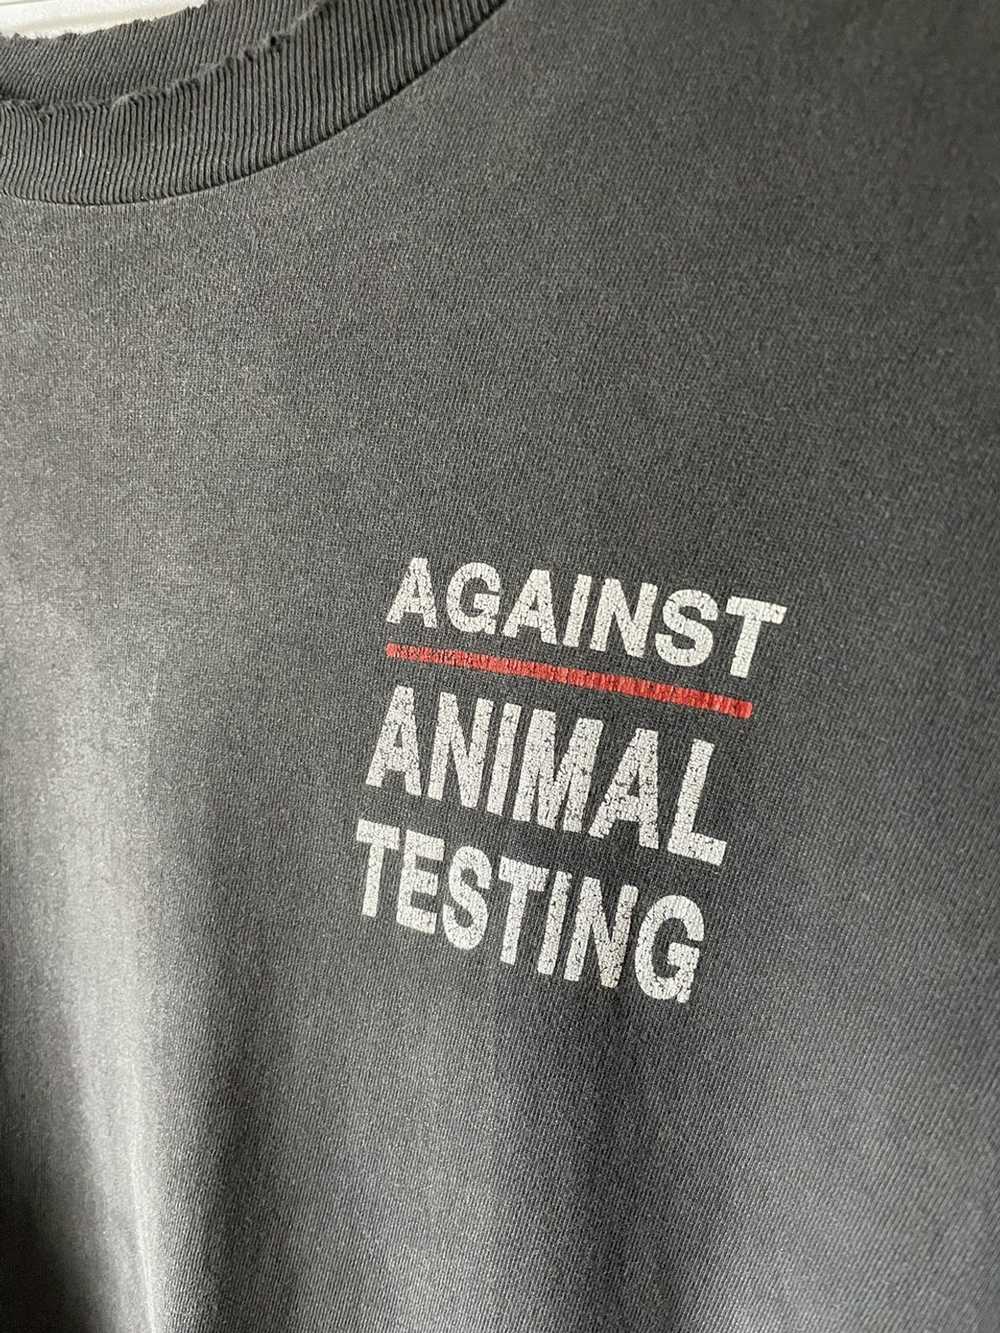 Vintage Vintage “No Animal Testing” print T shirt - image 2